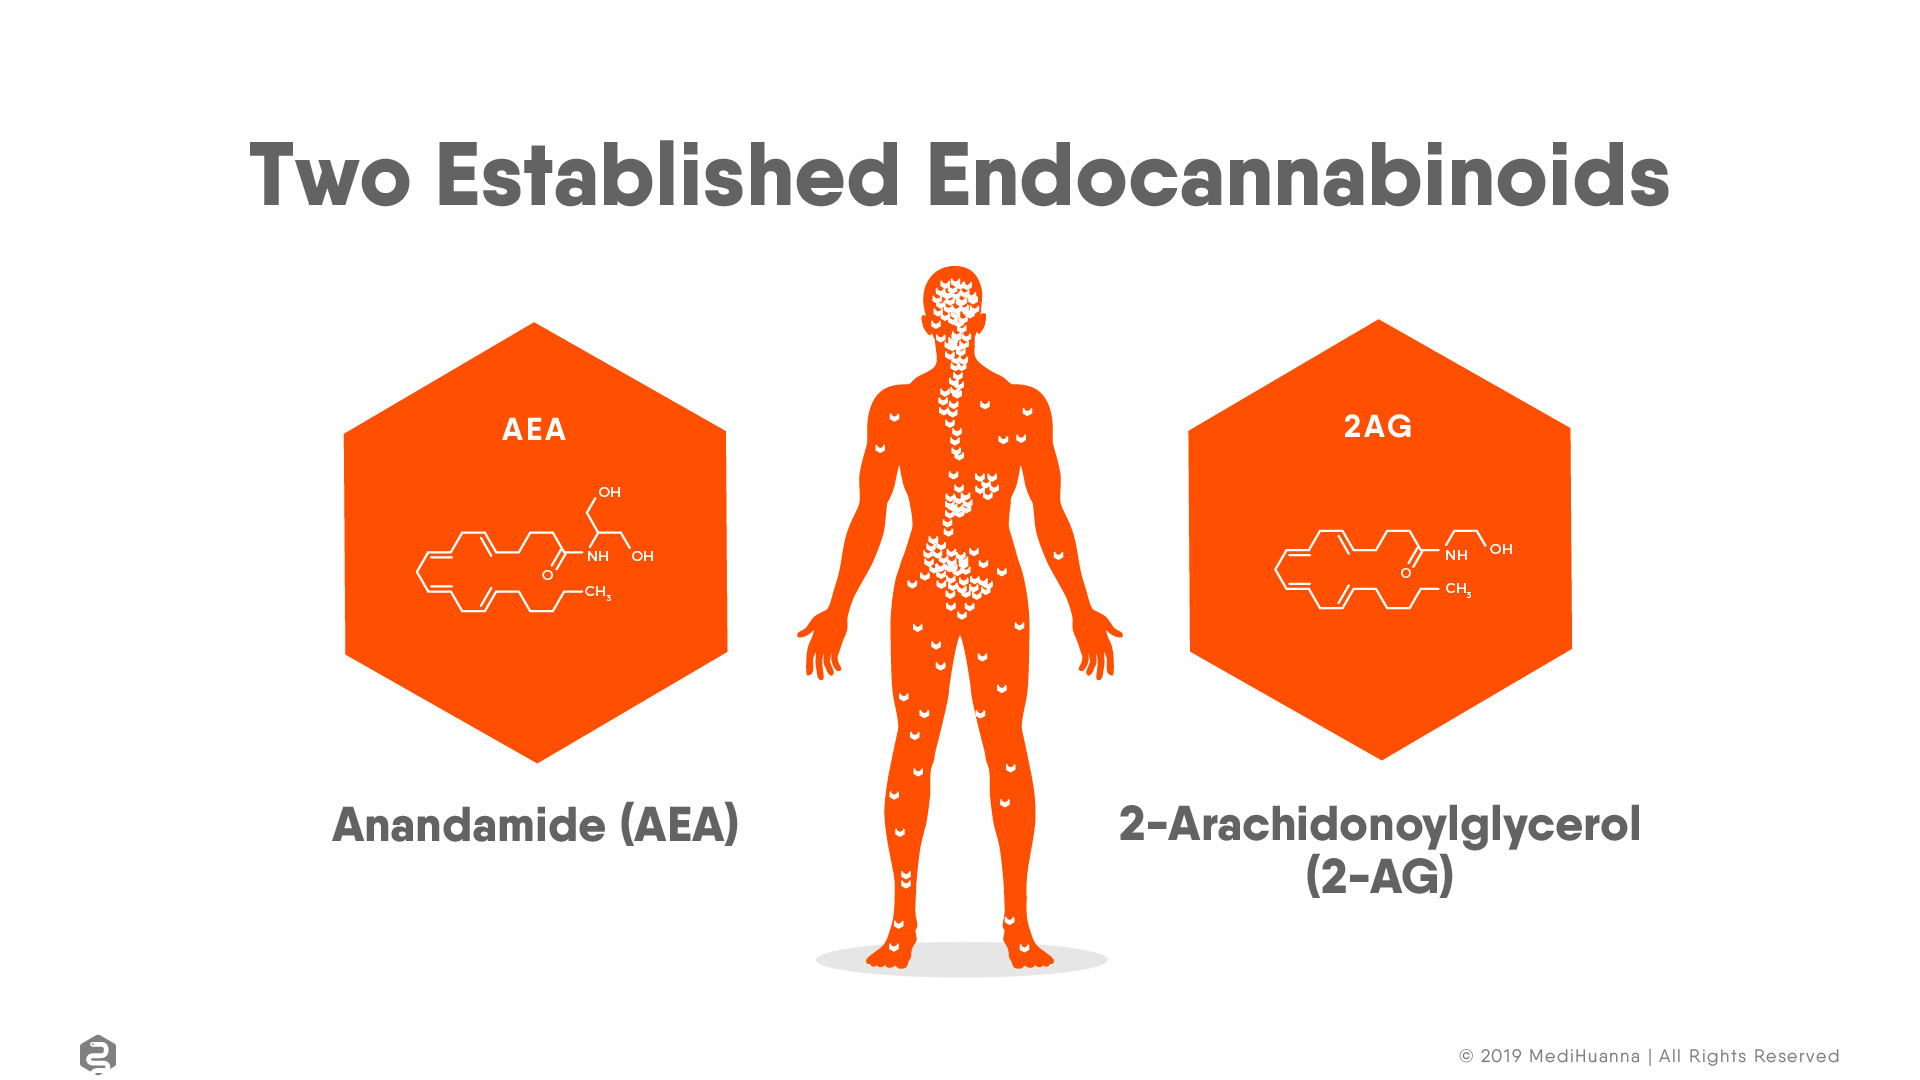 Two established endocannabinoids